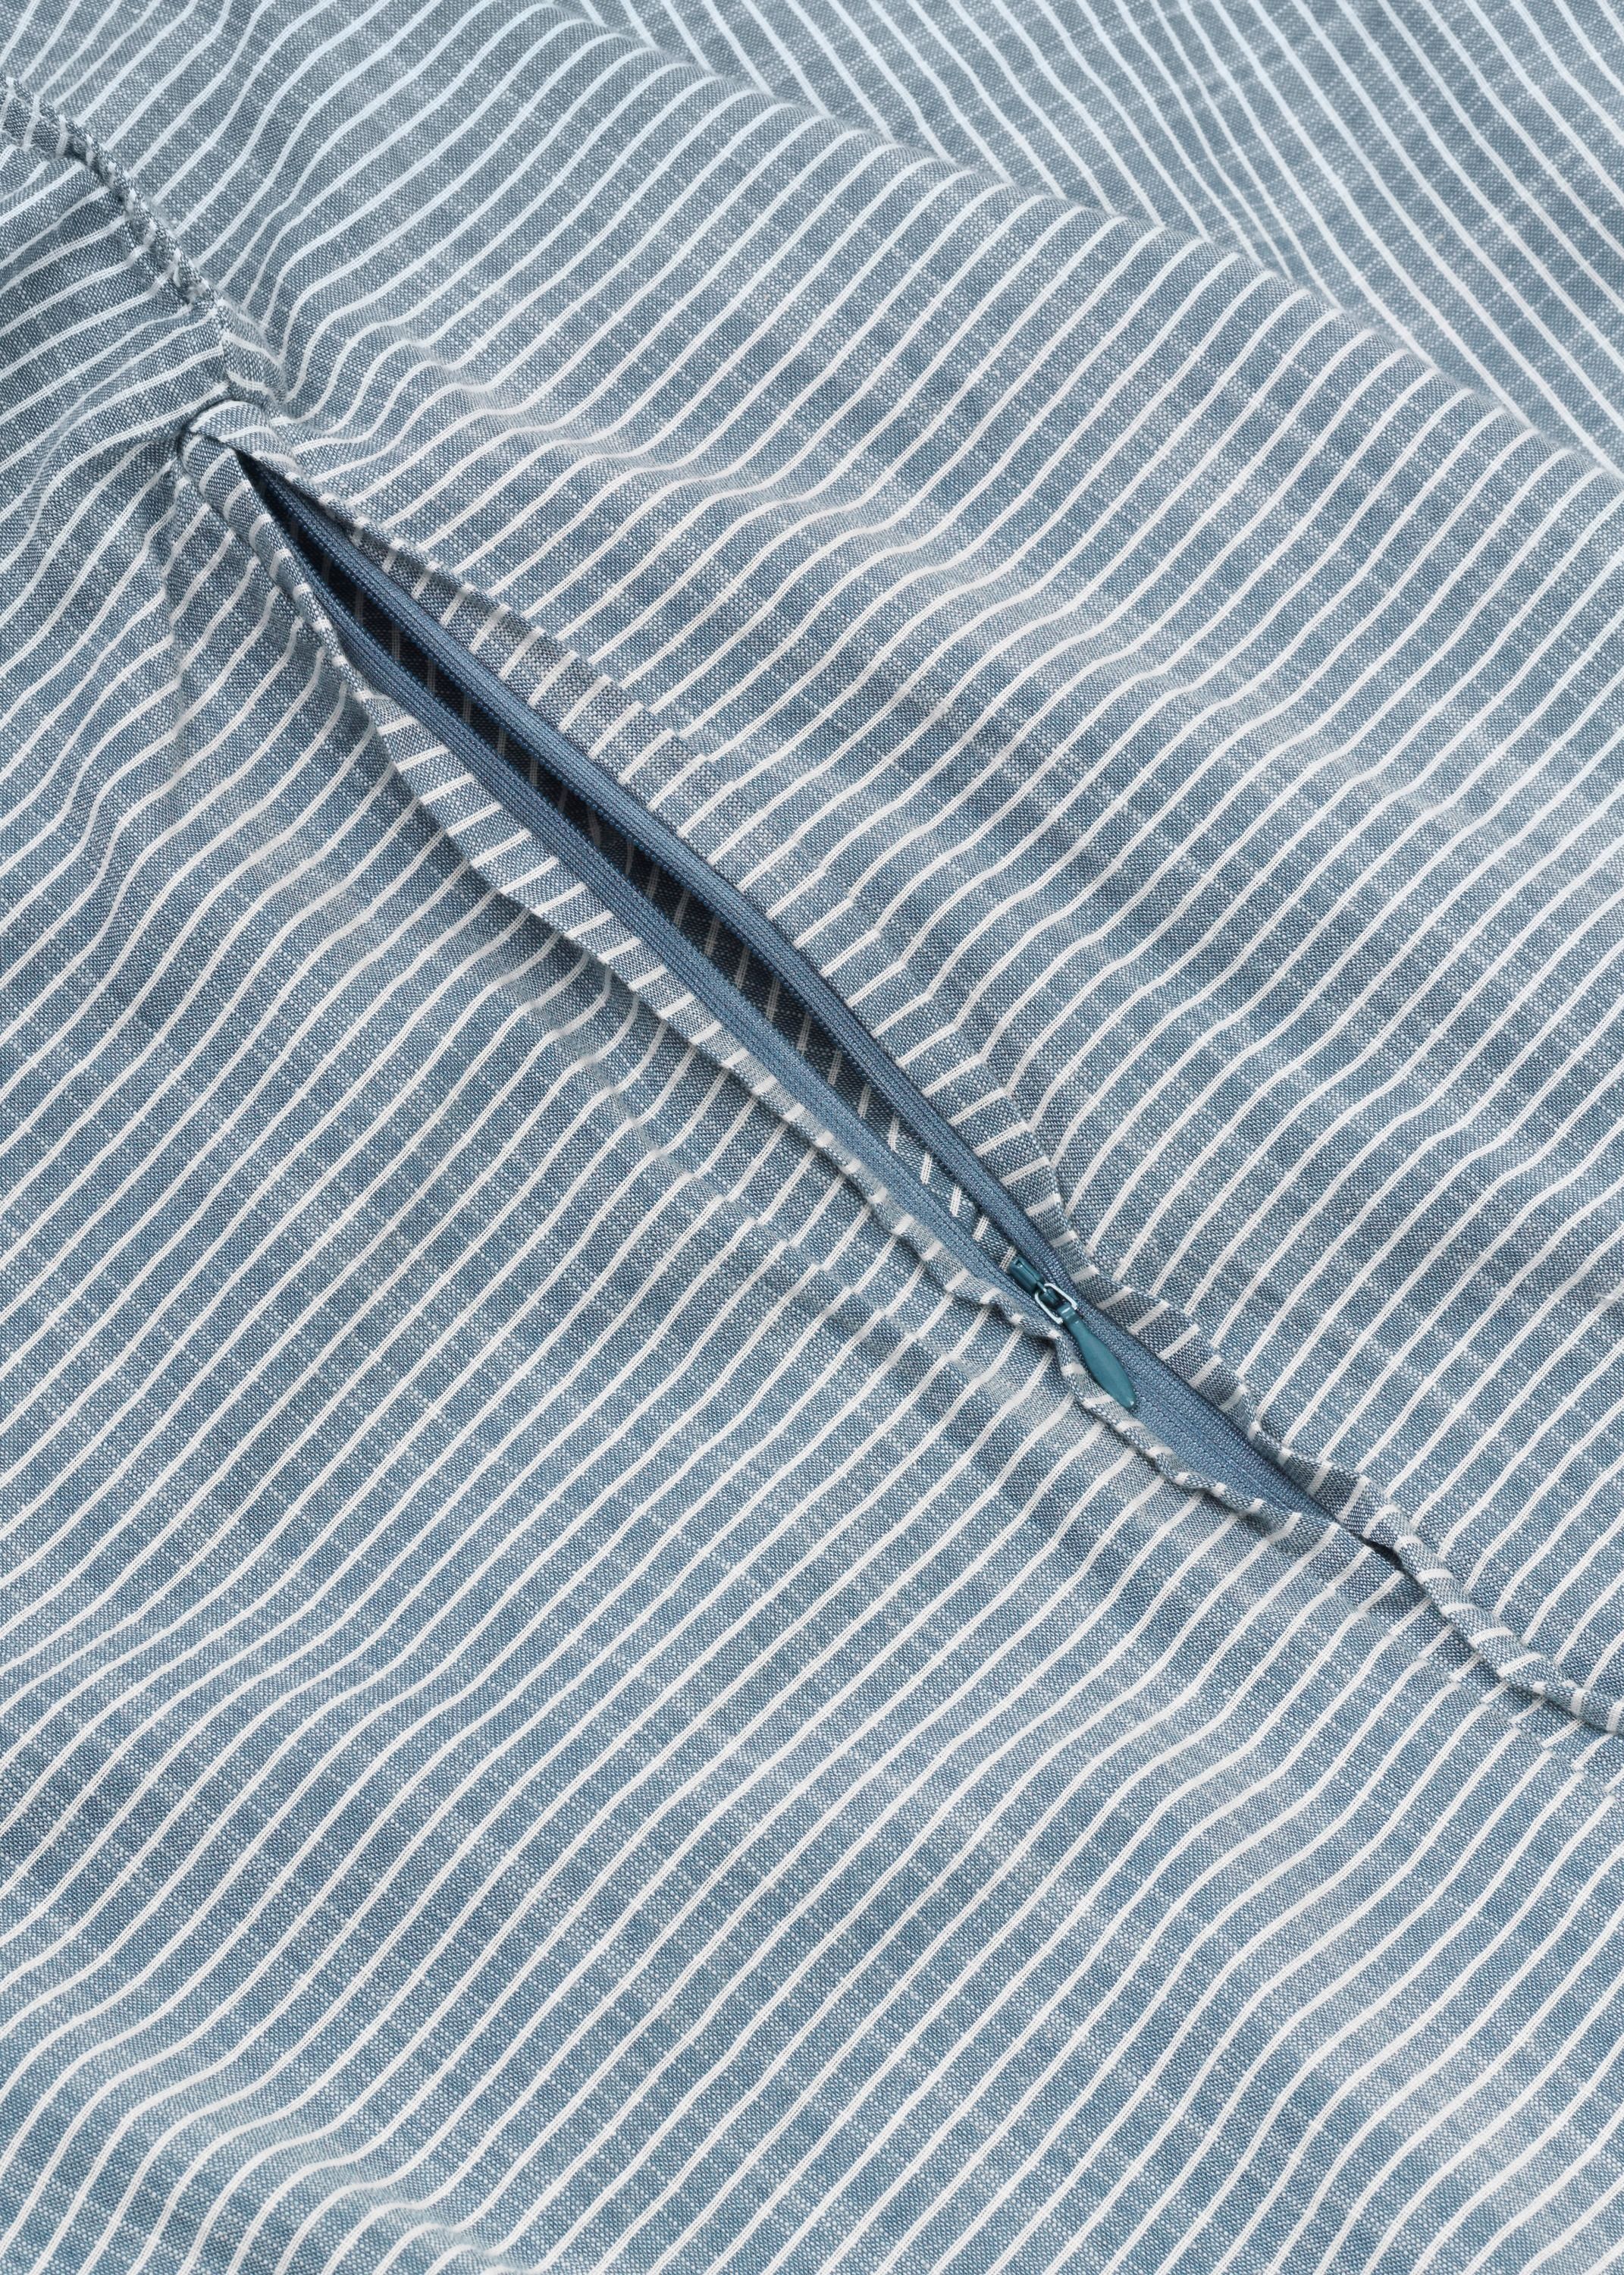 Bedlinen - Duvet SET striped 150x210 (SE size)